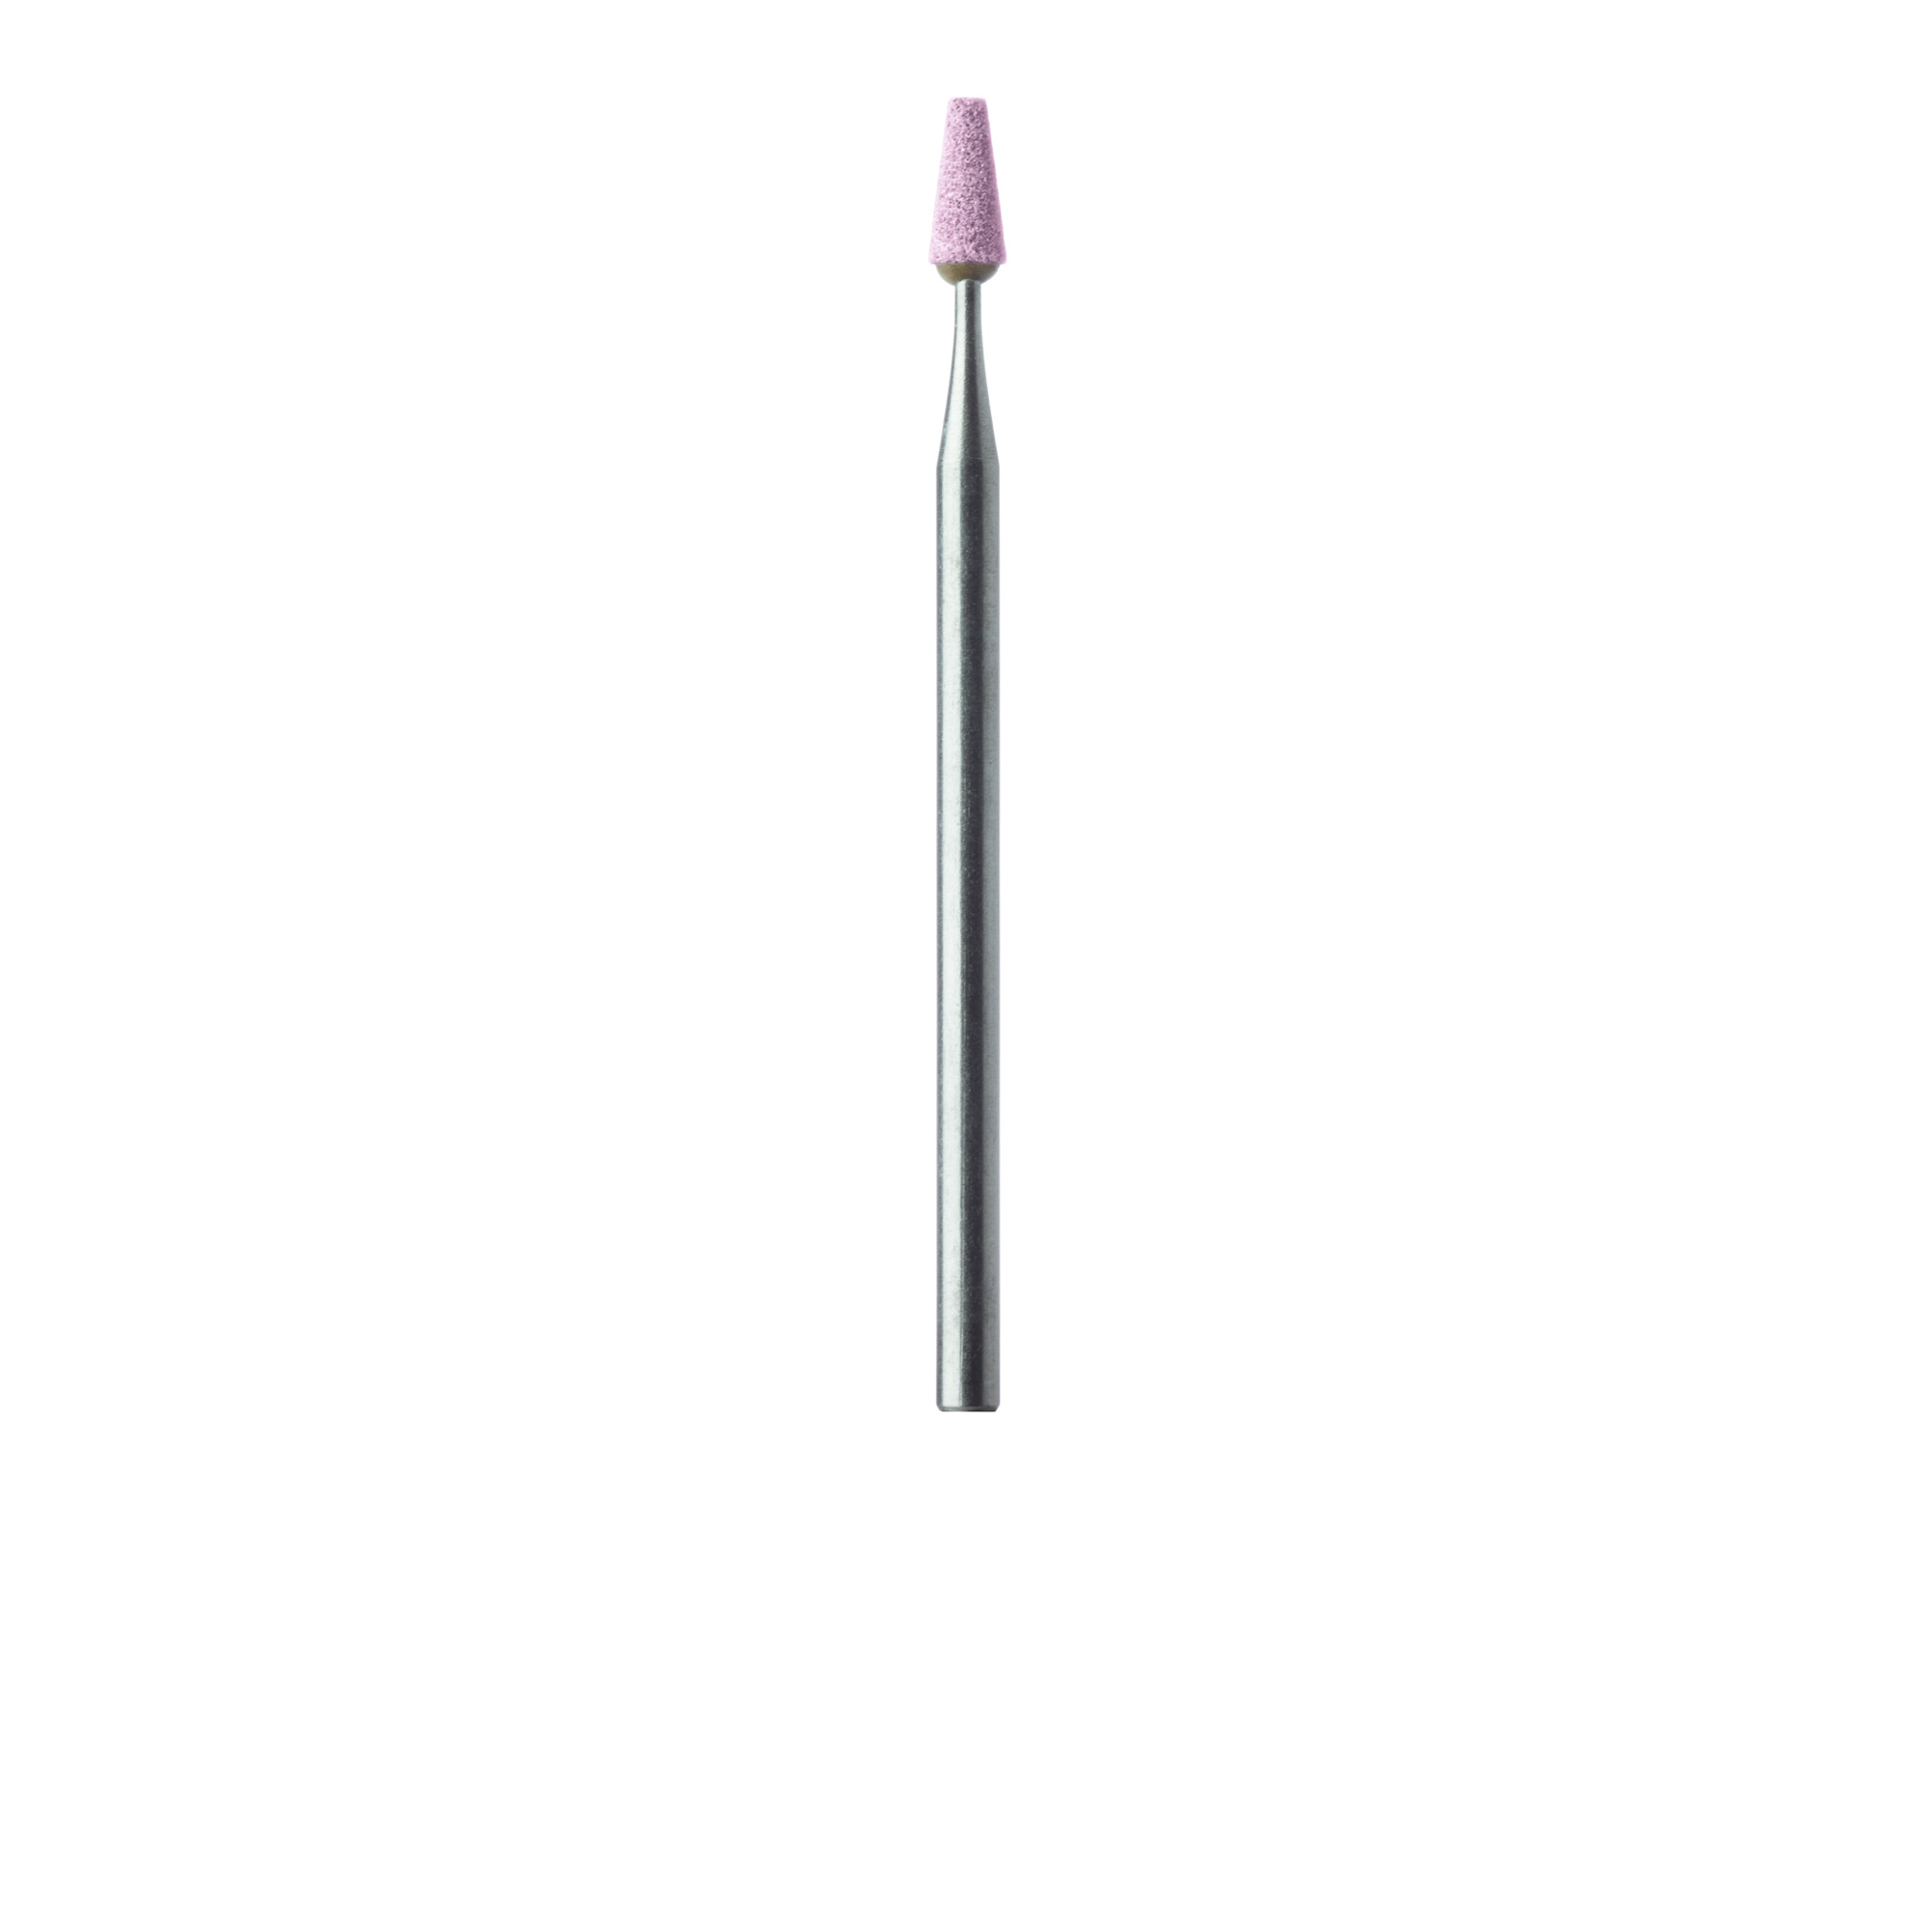 650-028-HP-P Abrasive, Pink, Tapered Flat End, 2.8mm Ø, Medium, HP